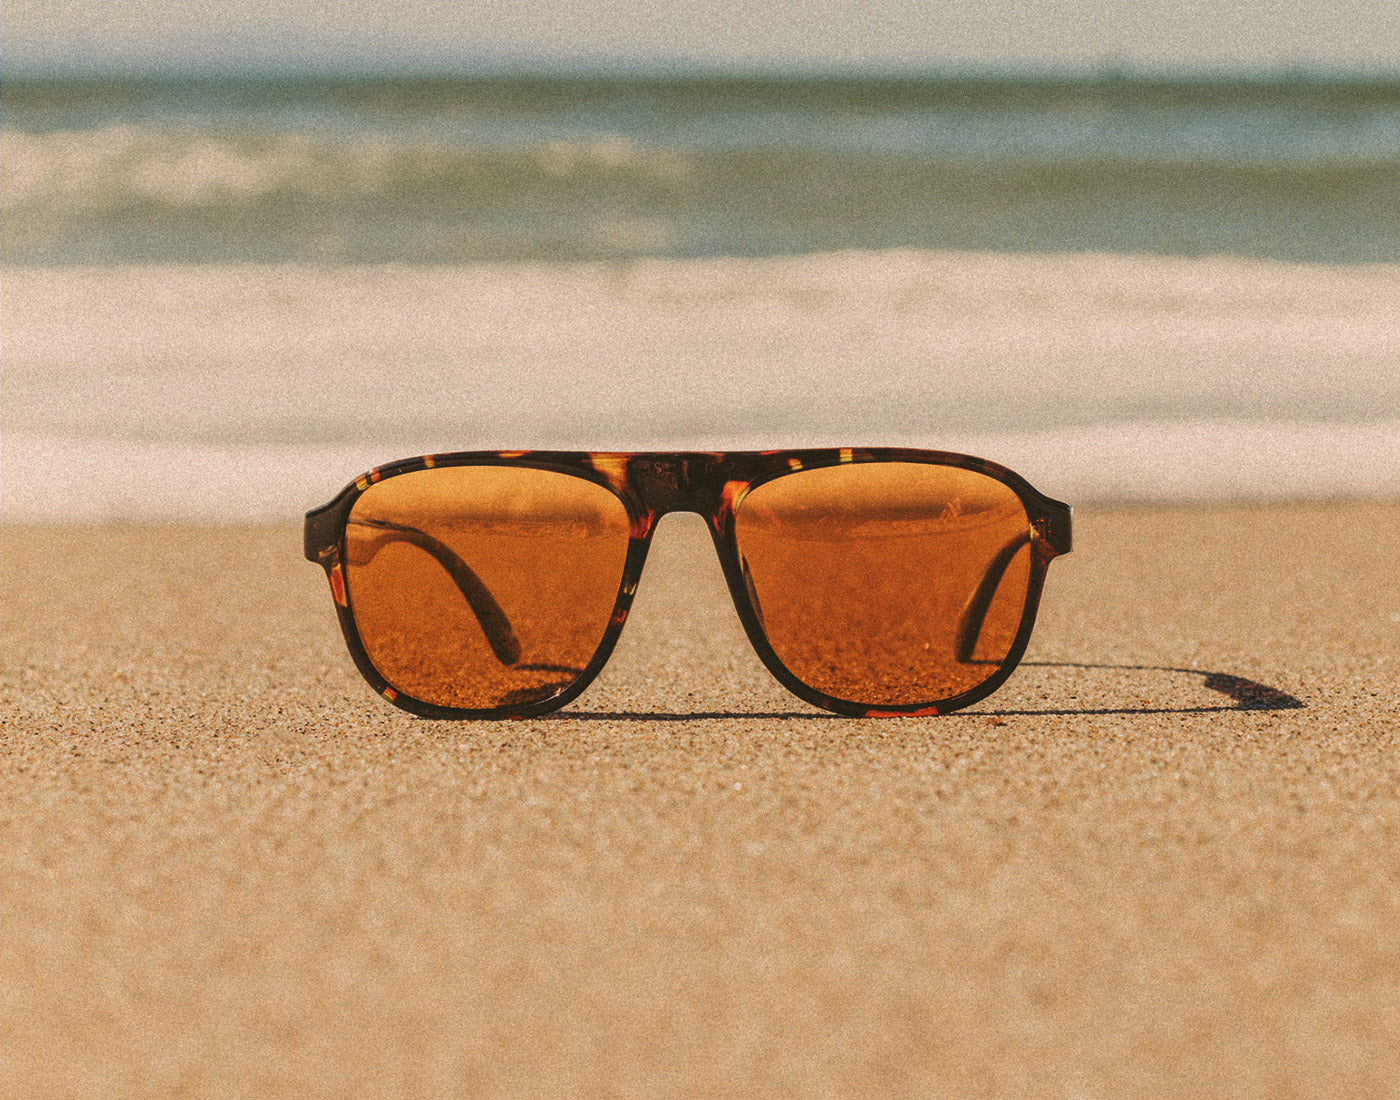 sunski shoreline sunglasses in the sand